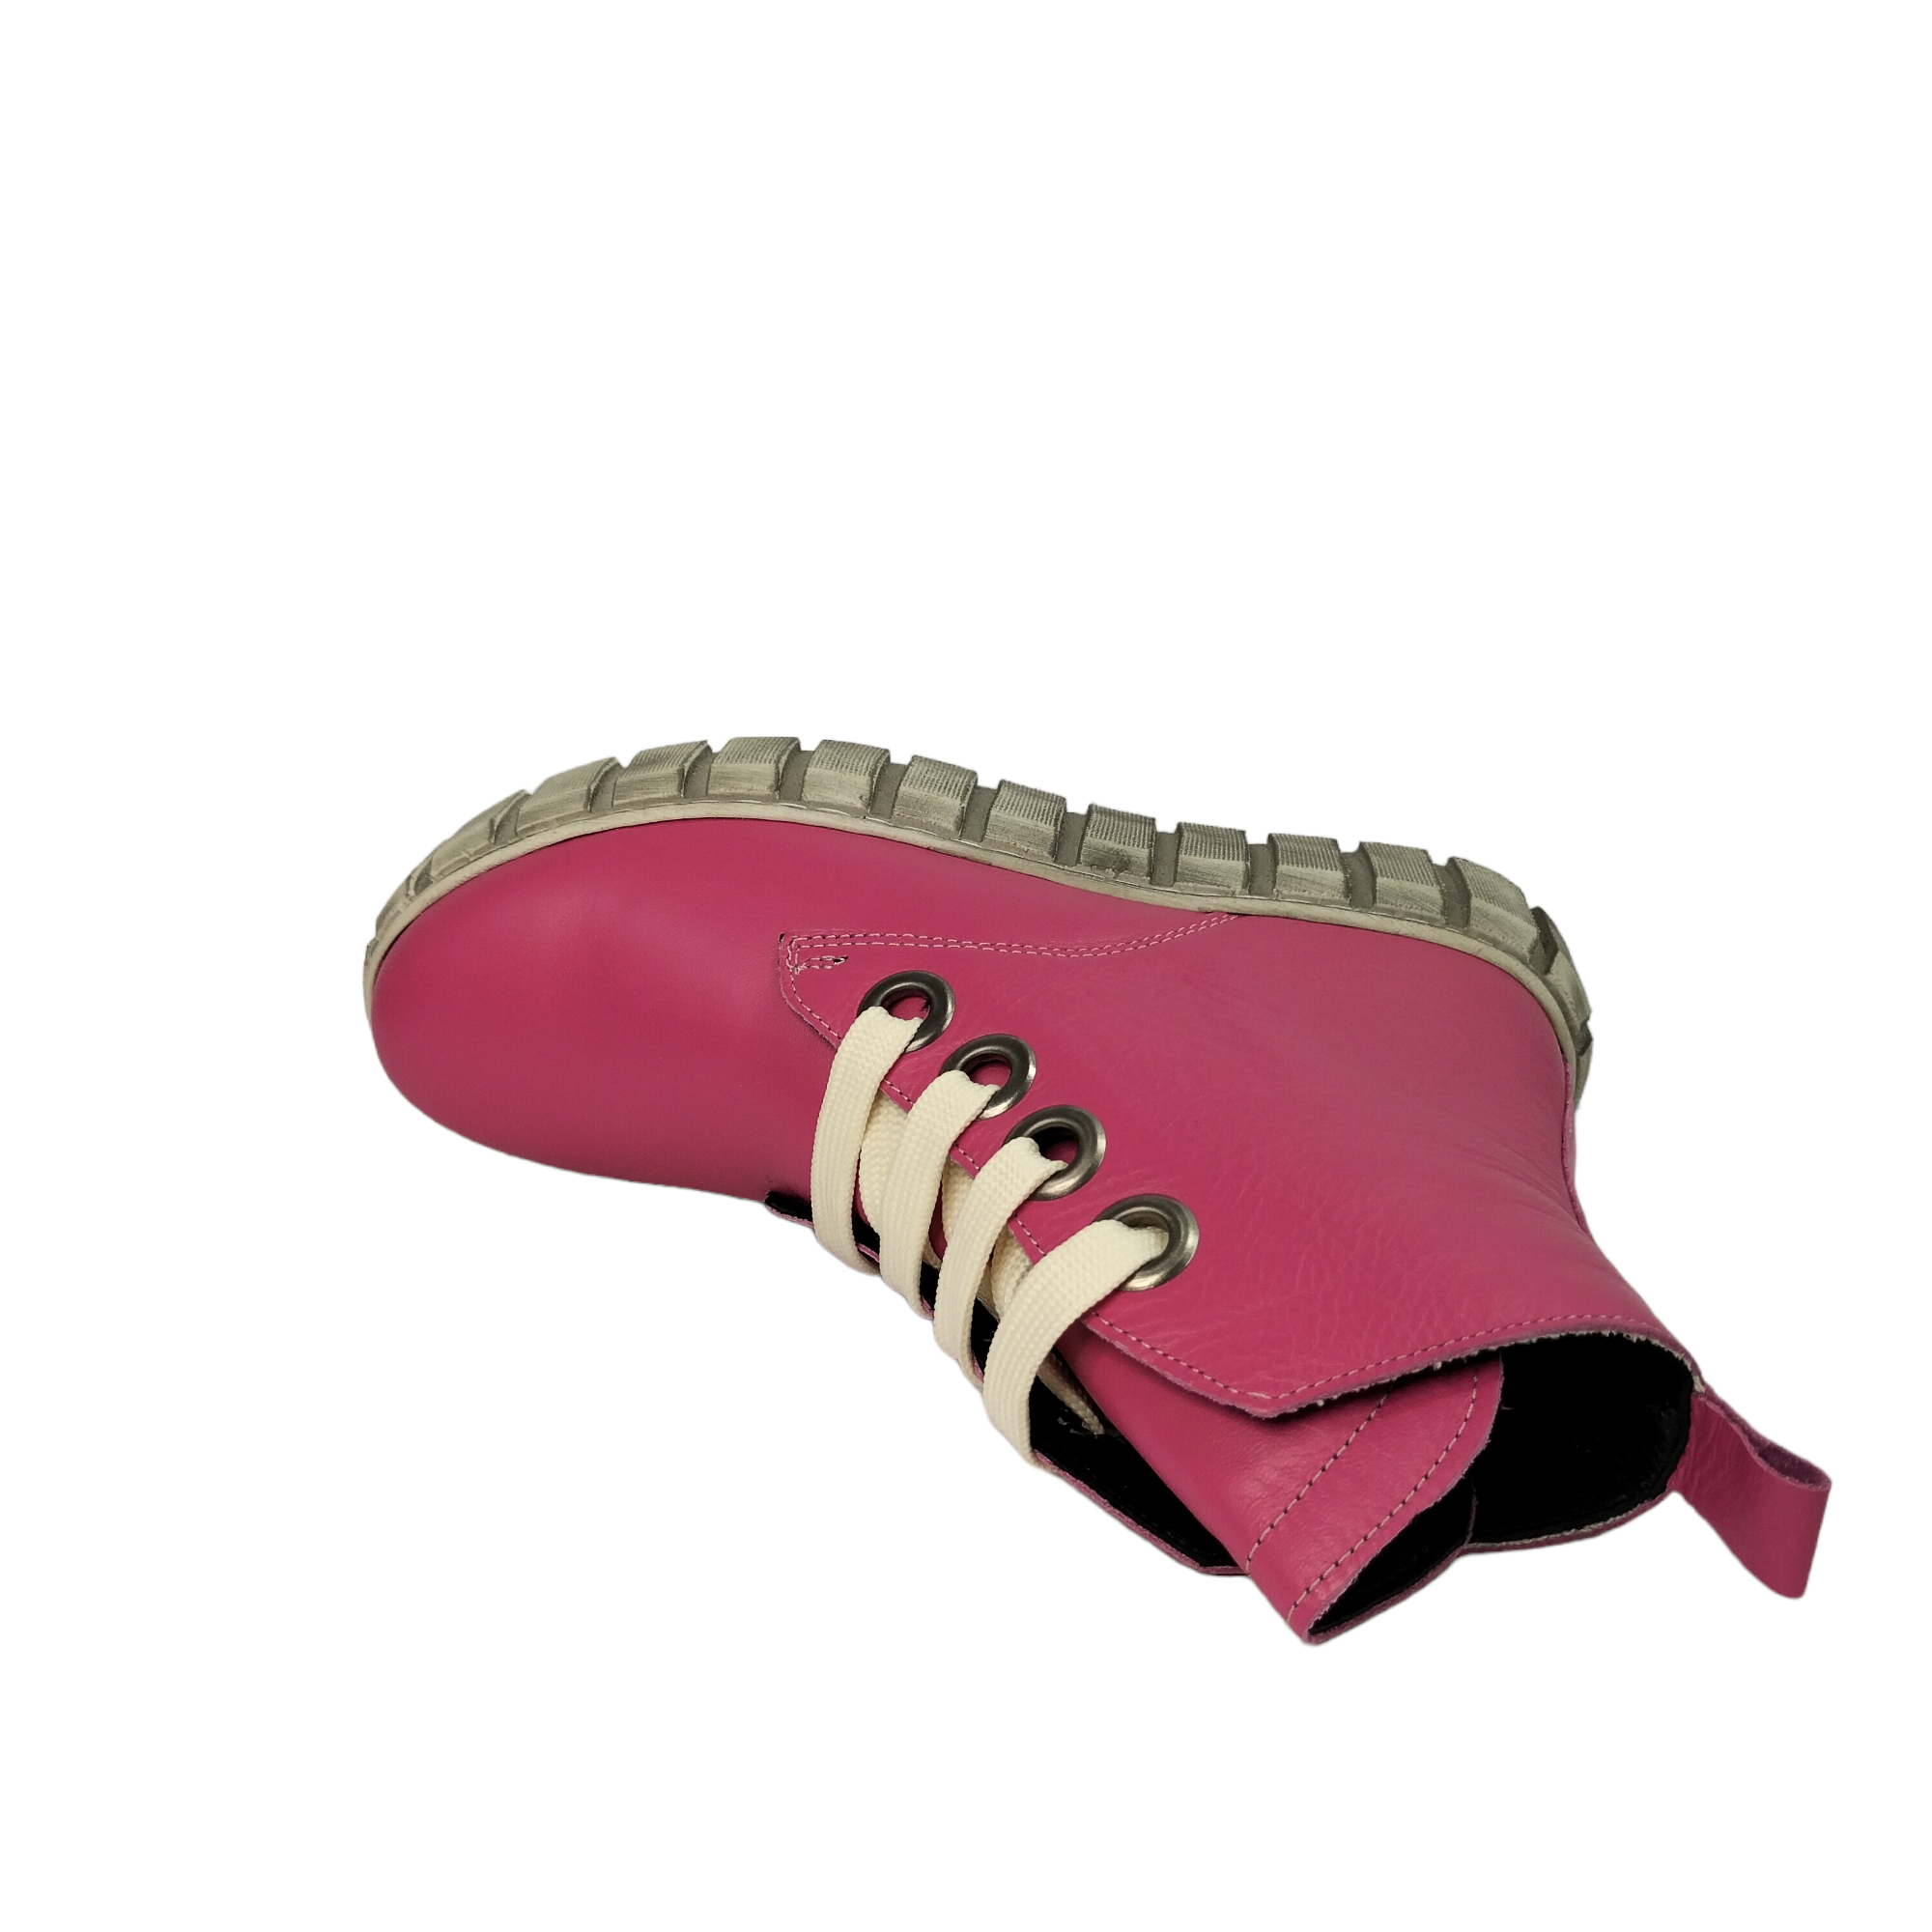 Taluka - shoe&amp;me - Rilassare - Boot - Boots, Womens